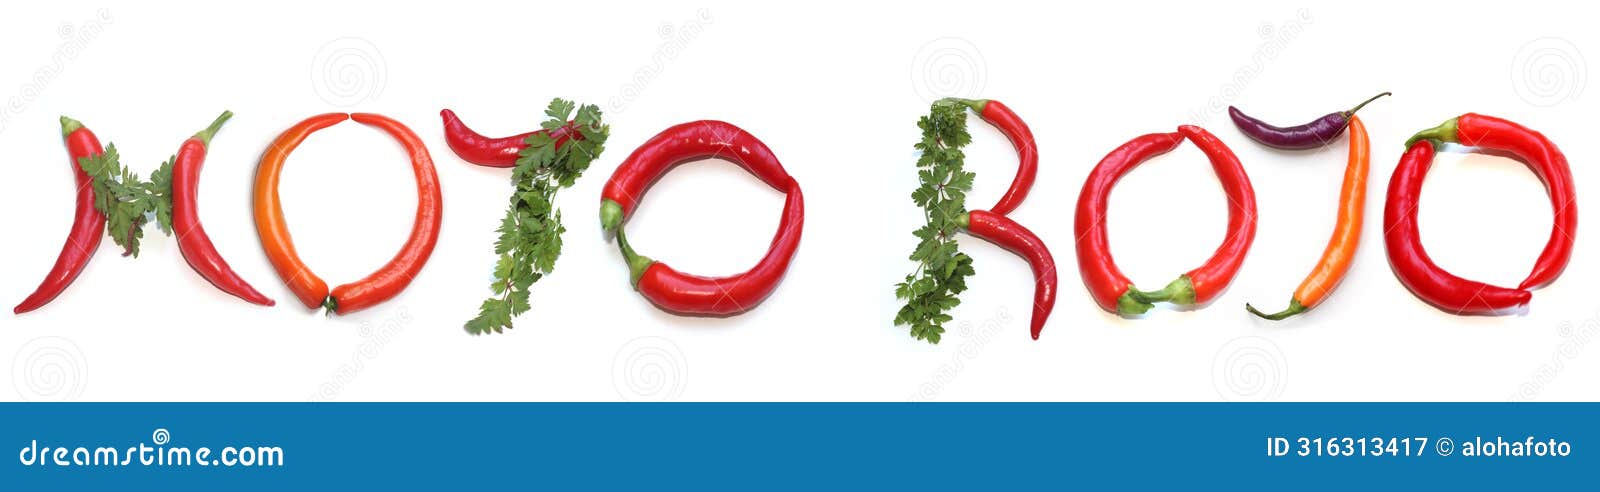 mojo rojo red yellow purple orange chili pepper and green herbs, parsley letter for mojo rojo recipe